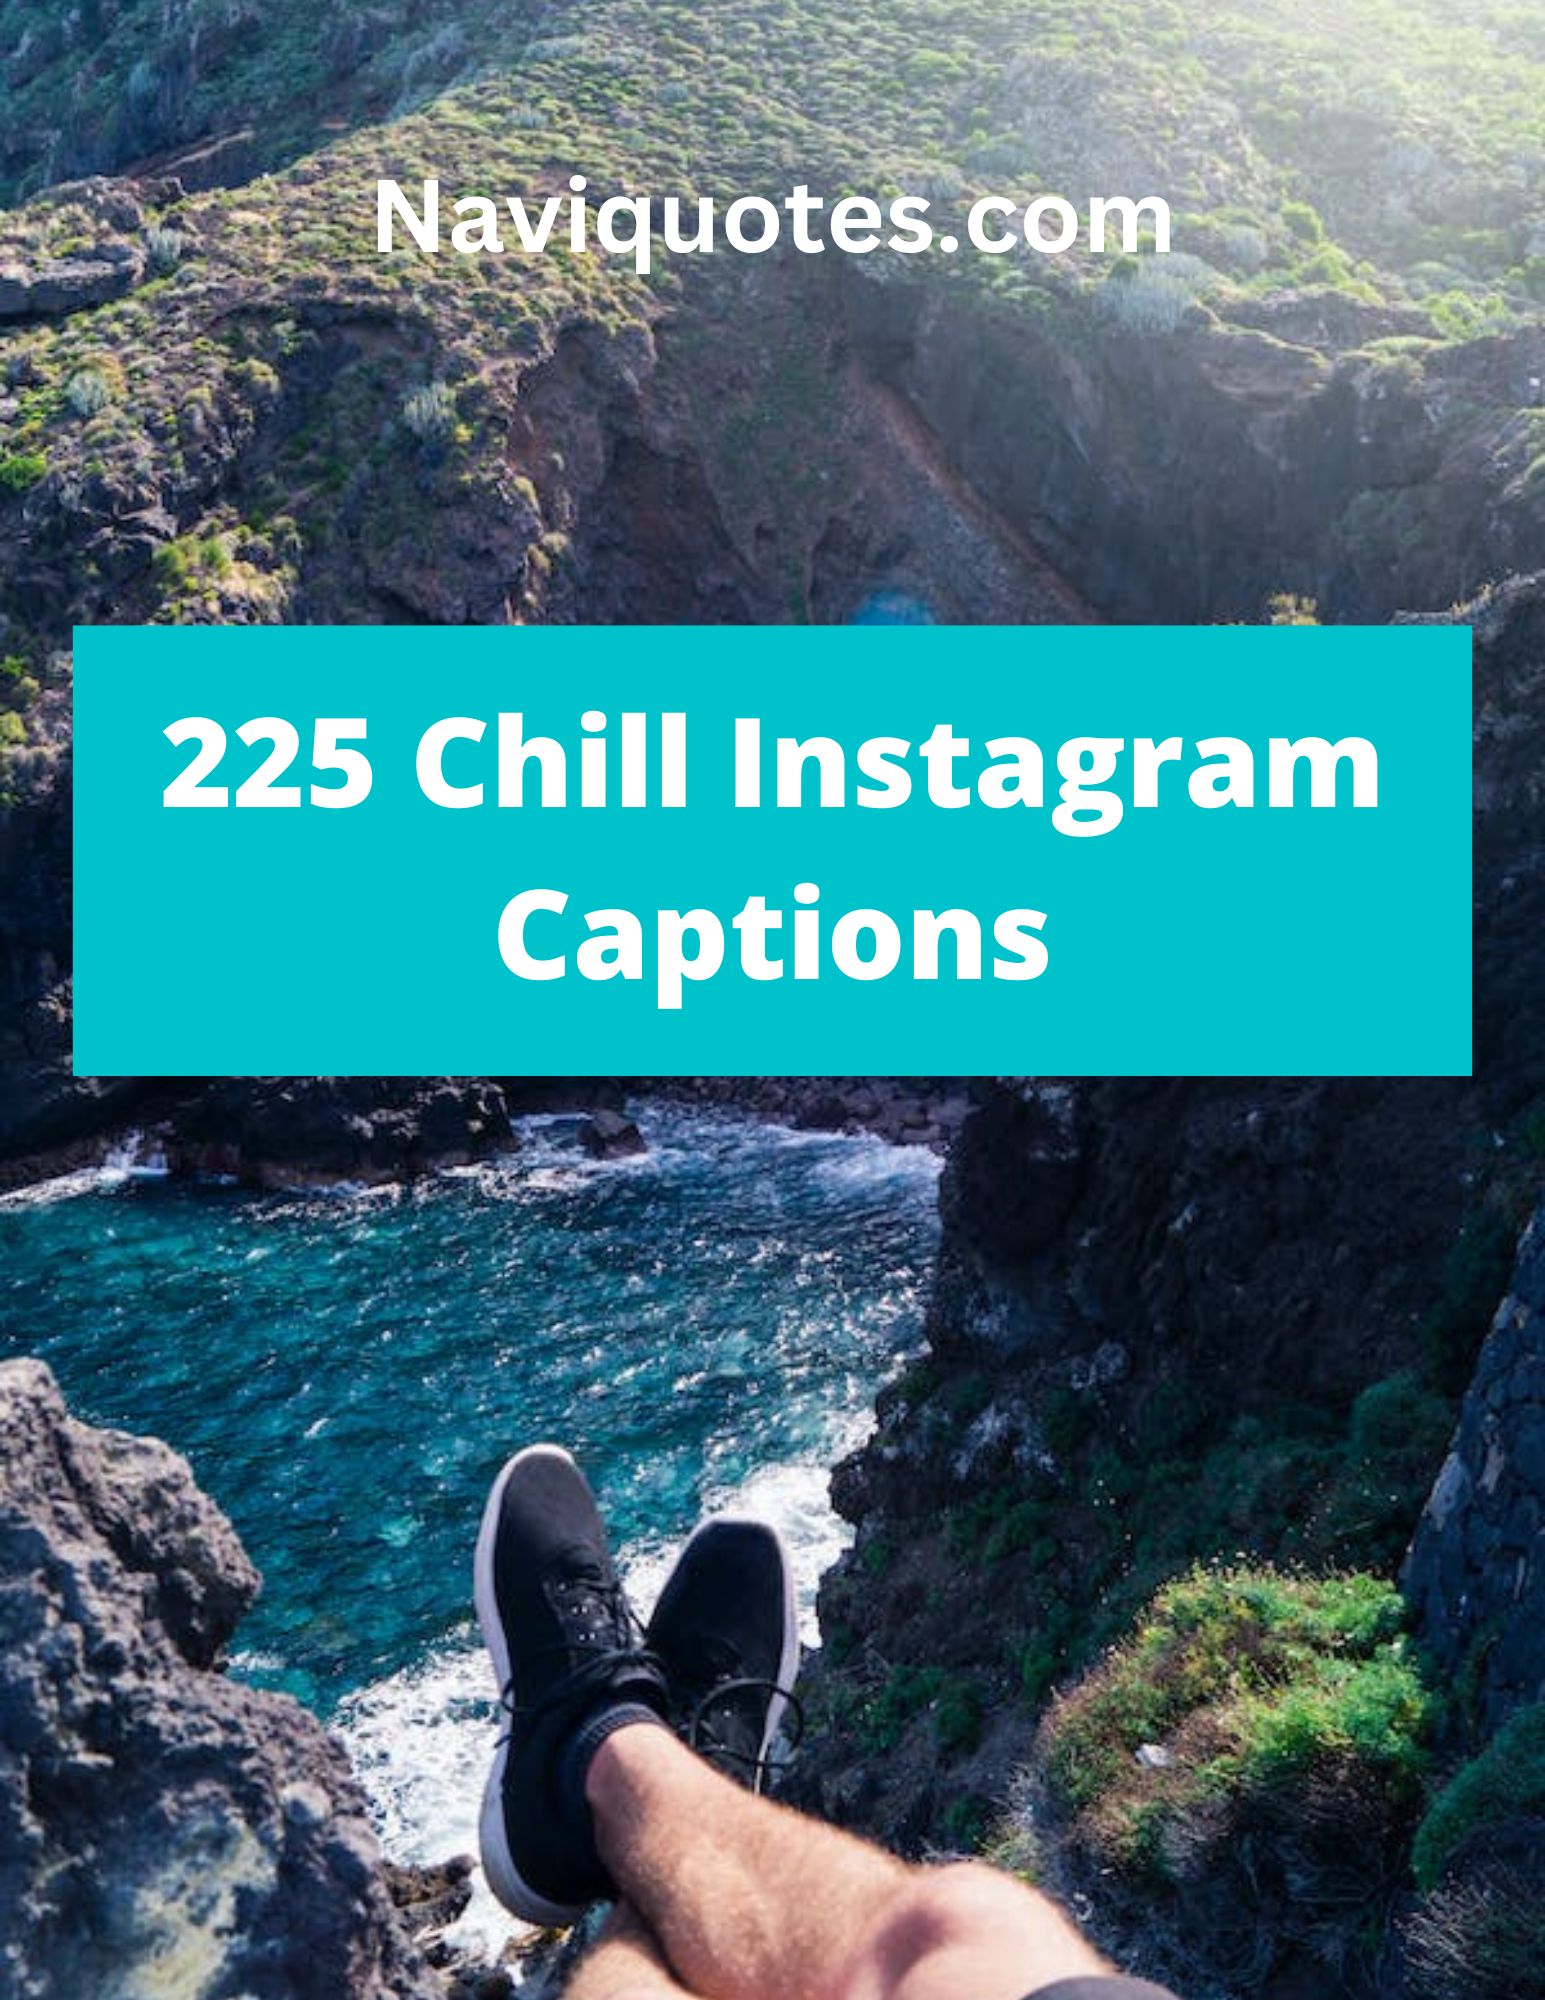 Chill Instagram Captions